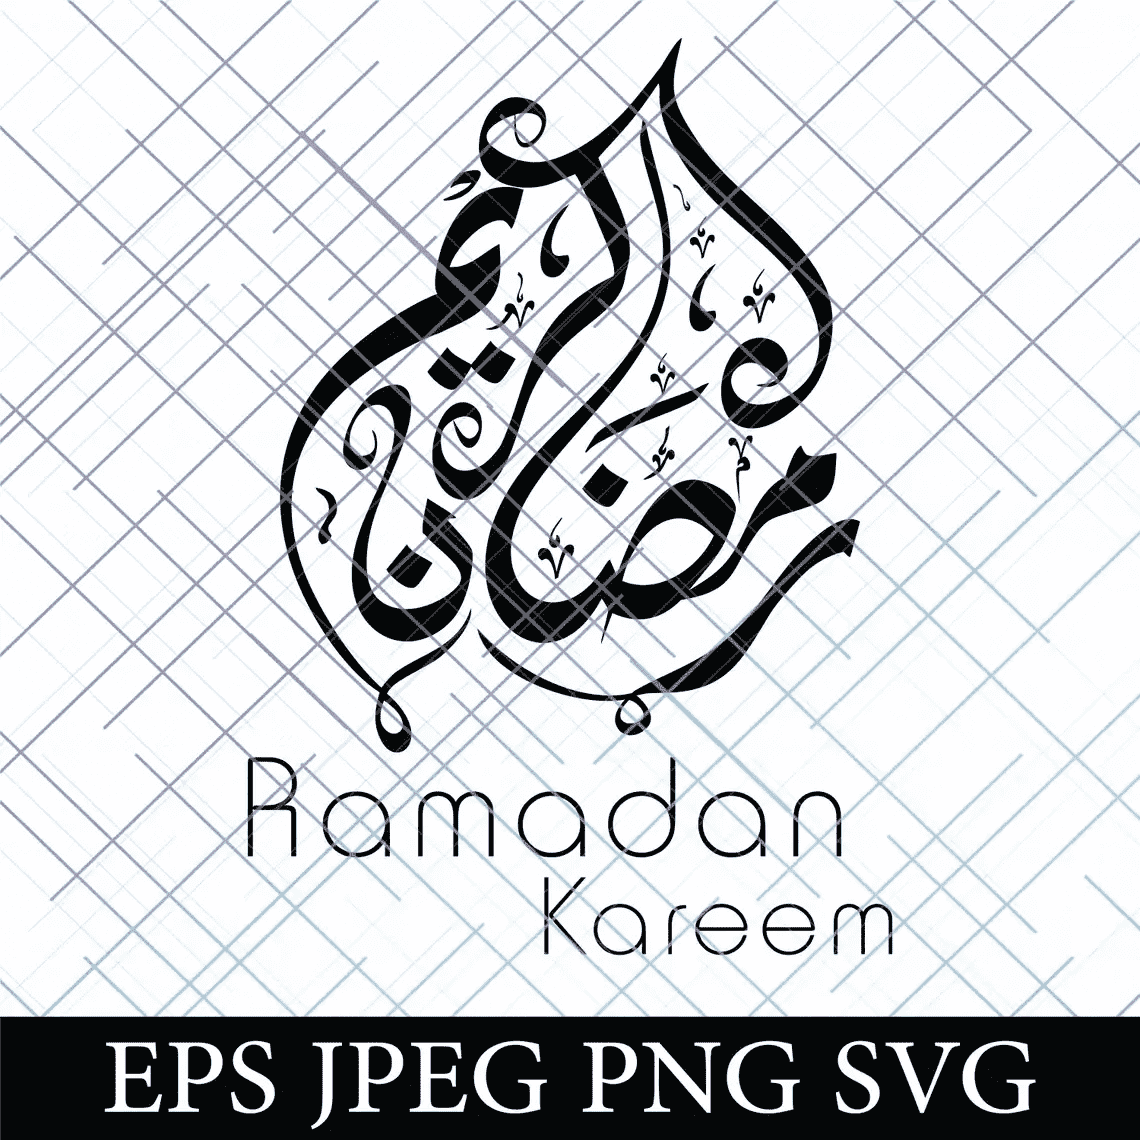 Ramadan kareem SVG.